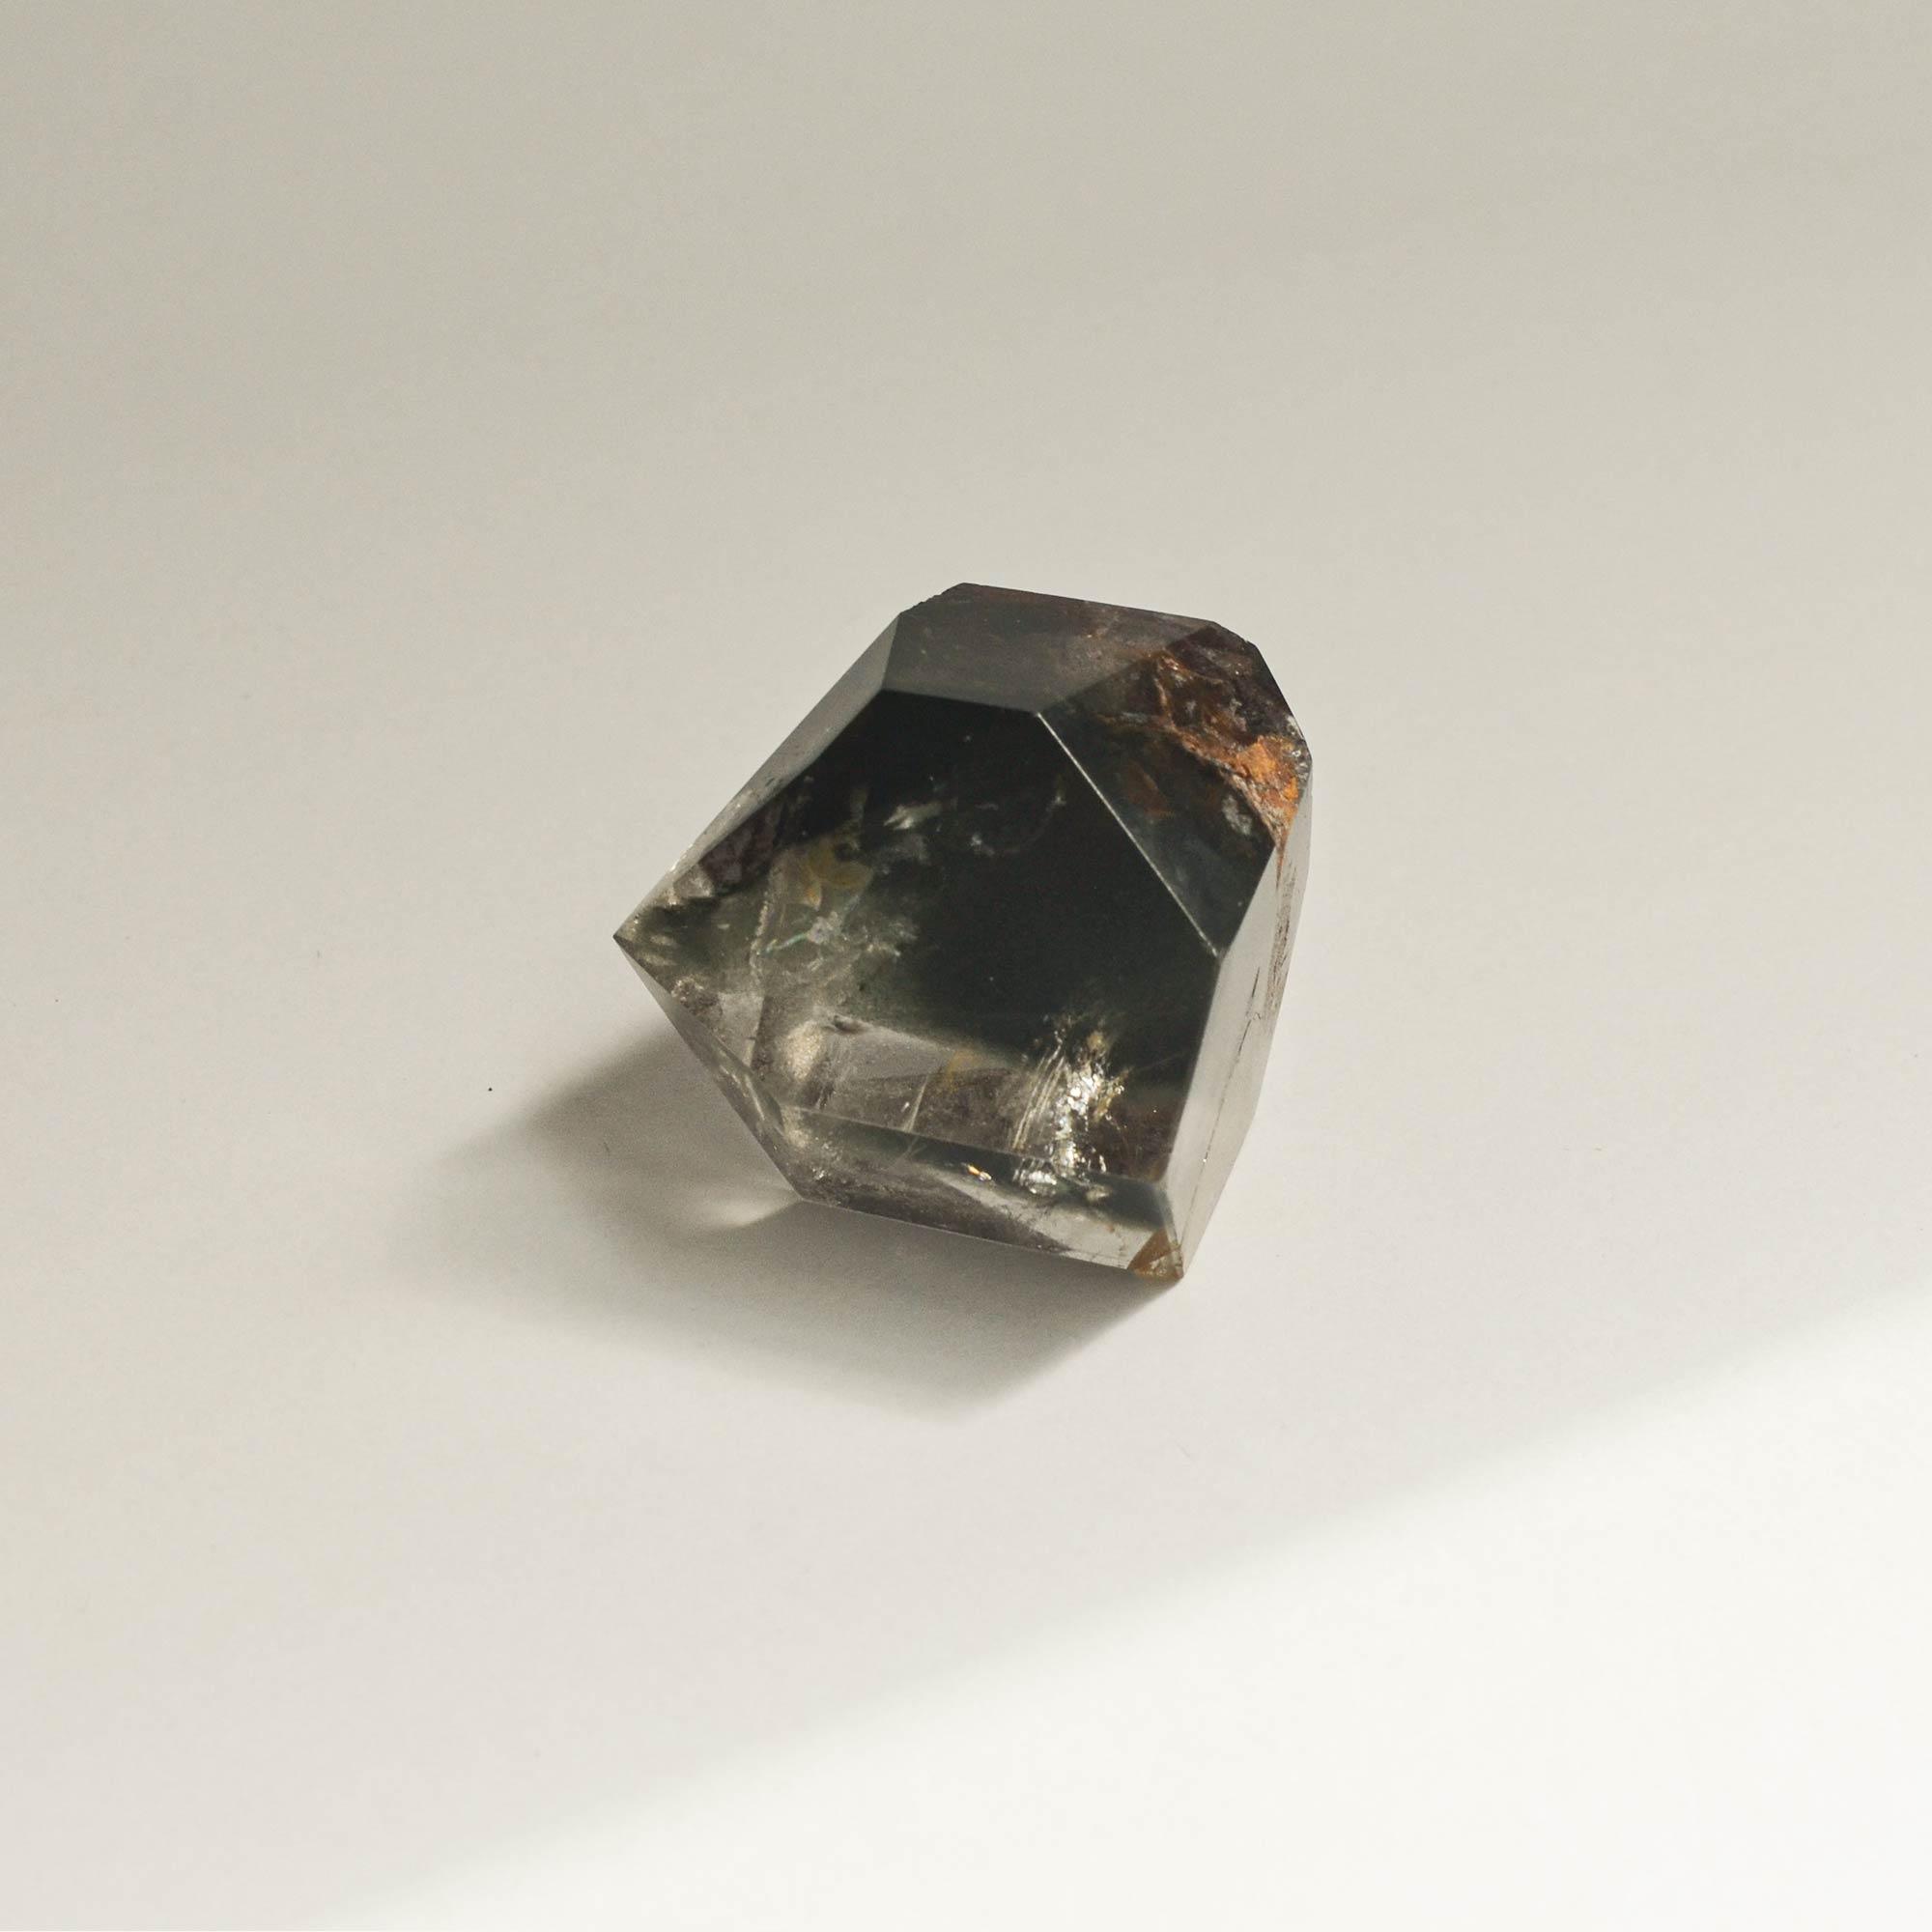 short phantom quartz with hematite and amethyst pattern in rear version